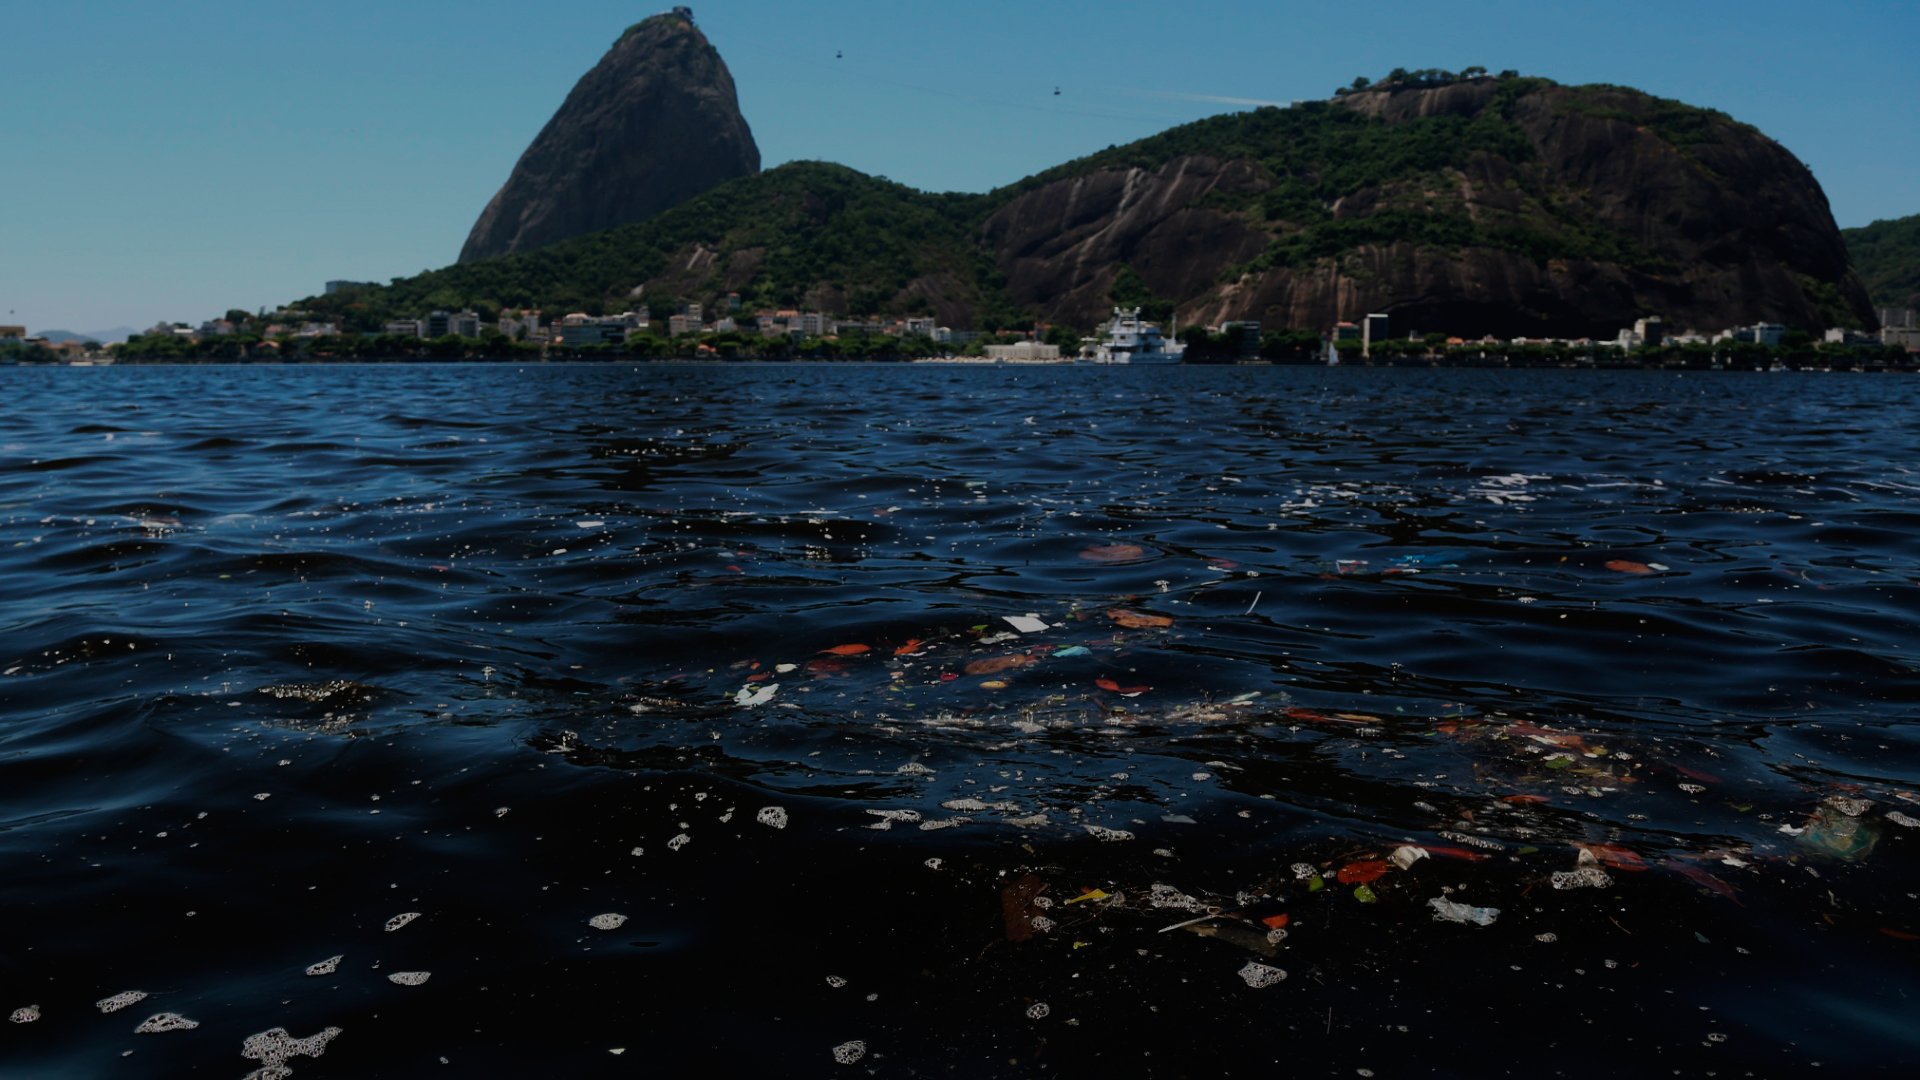 Вода в заливе сегодня. Залив Гуанабара. Залив Гуанабара в Рио-де-Жанейро. Рио де Жанейро бухта Гуанабара. Разлив нефти в Бразилии Гуанабара.